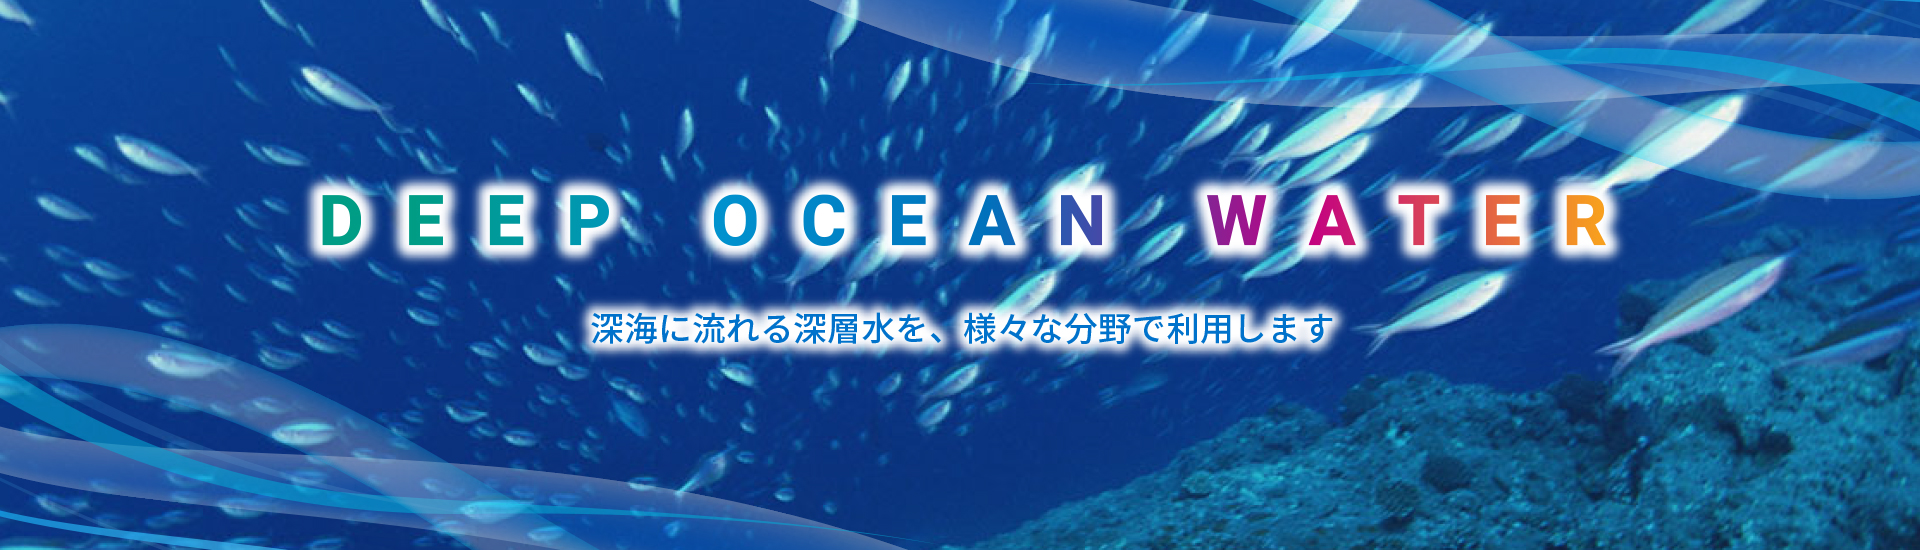 Deep Ocean Water Application